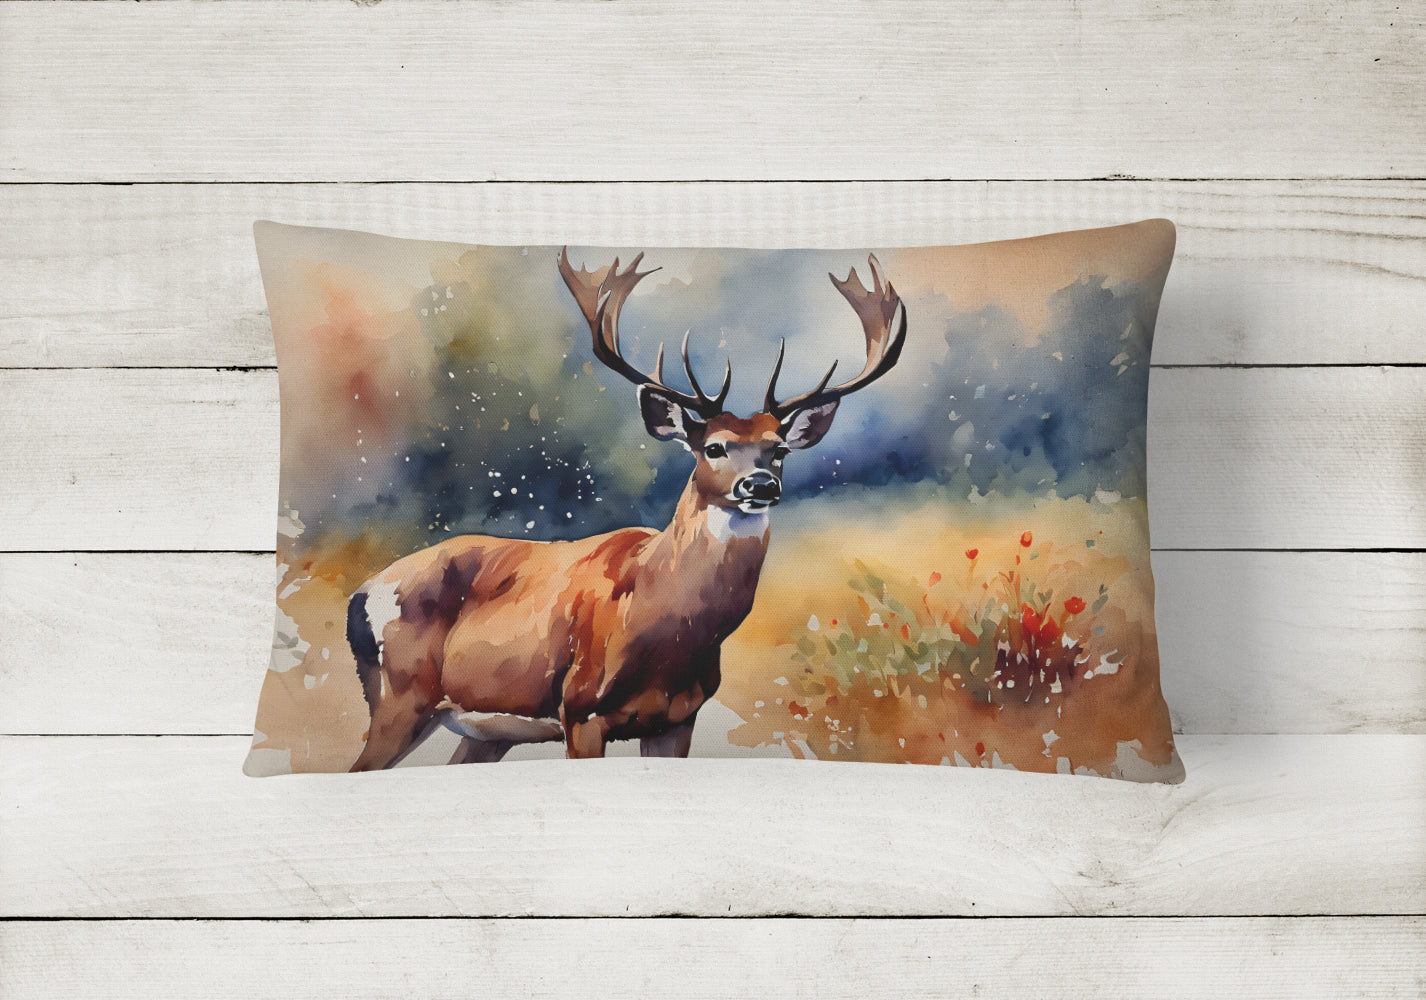 Buy this Deer Throw Pillow